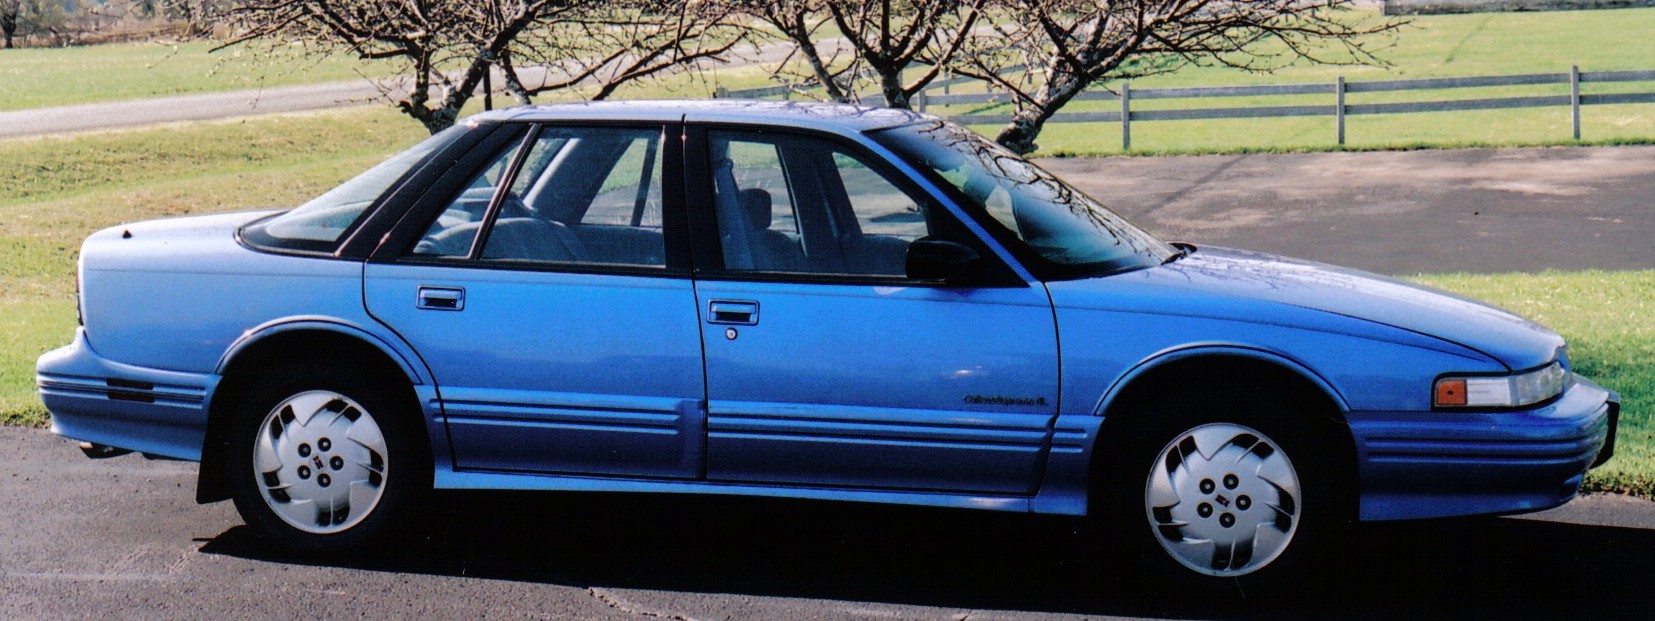 1994 Oldsmobile Cutlass Supreme - Research the 1994 Cutlass